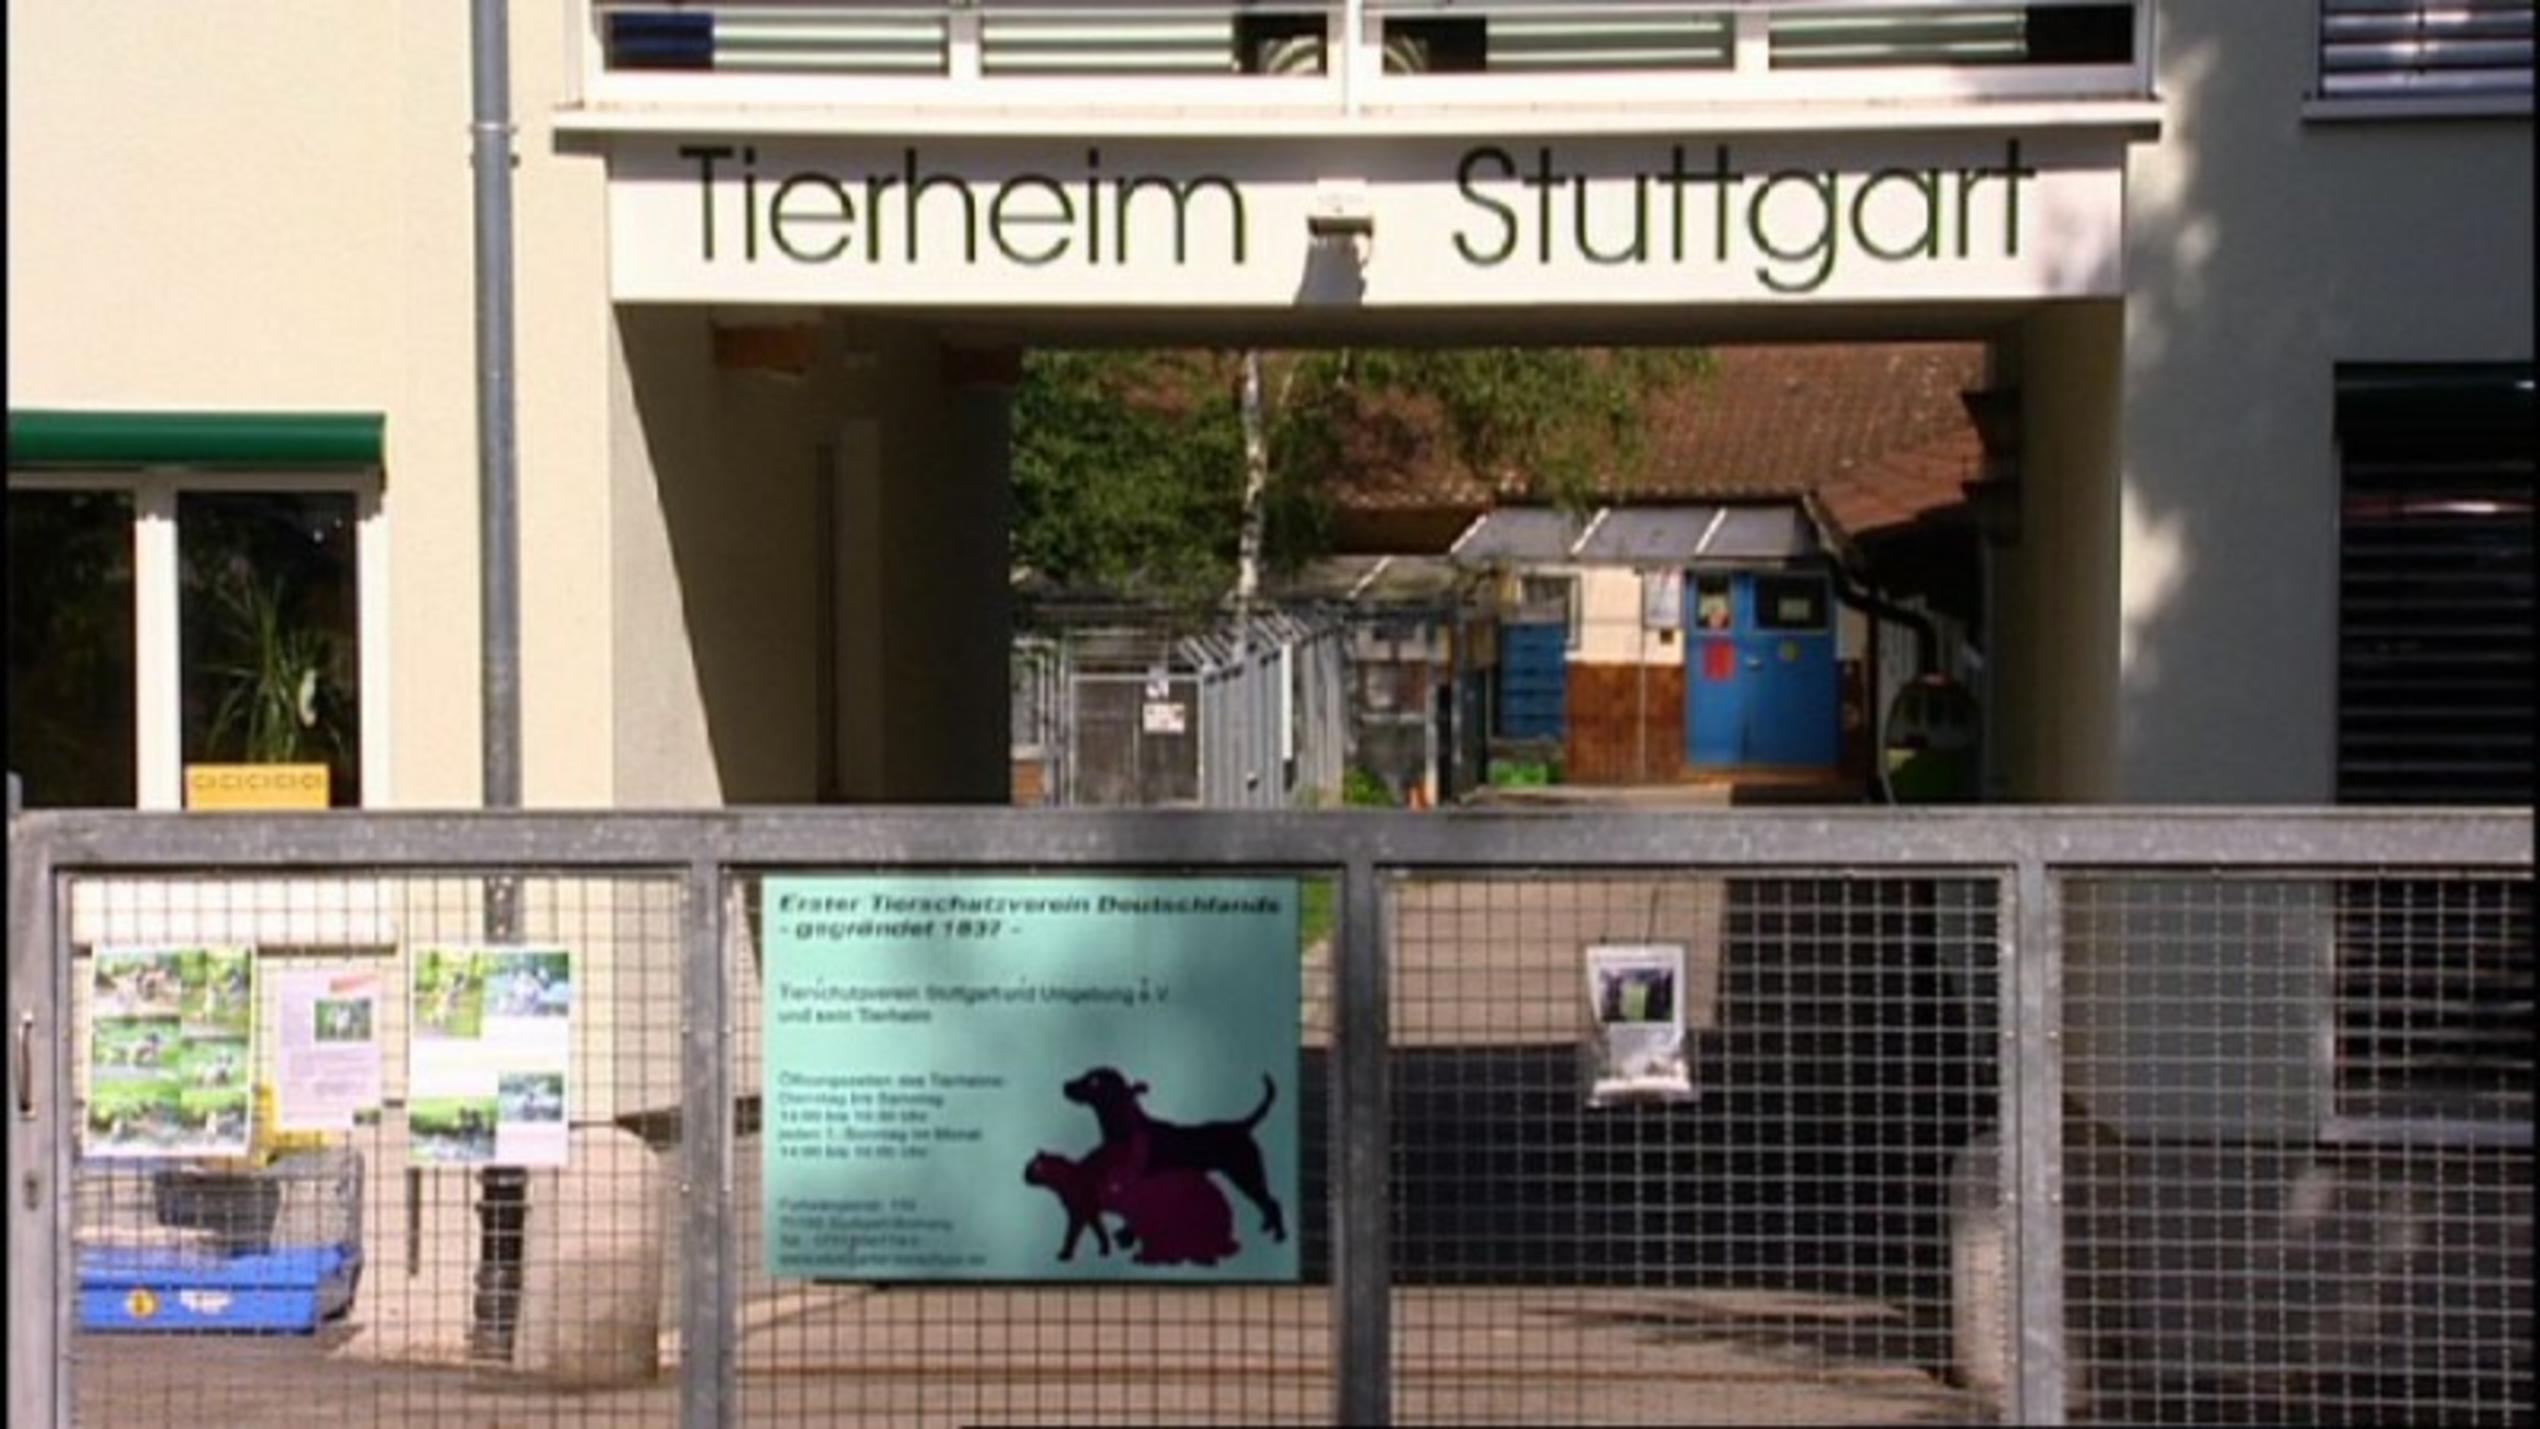 Tierheim Stuttgart